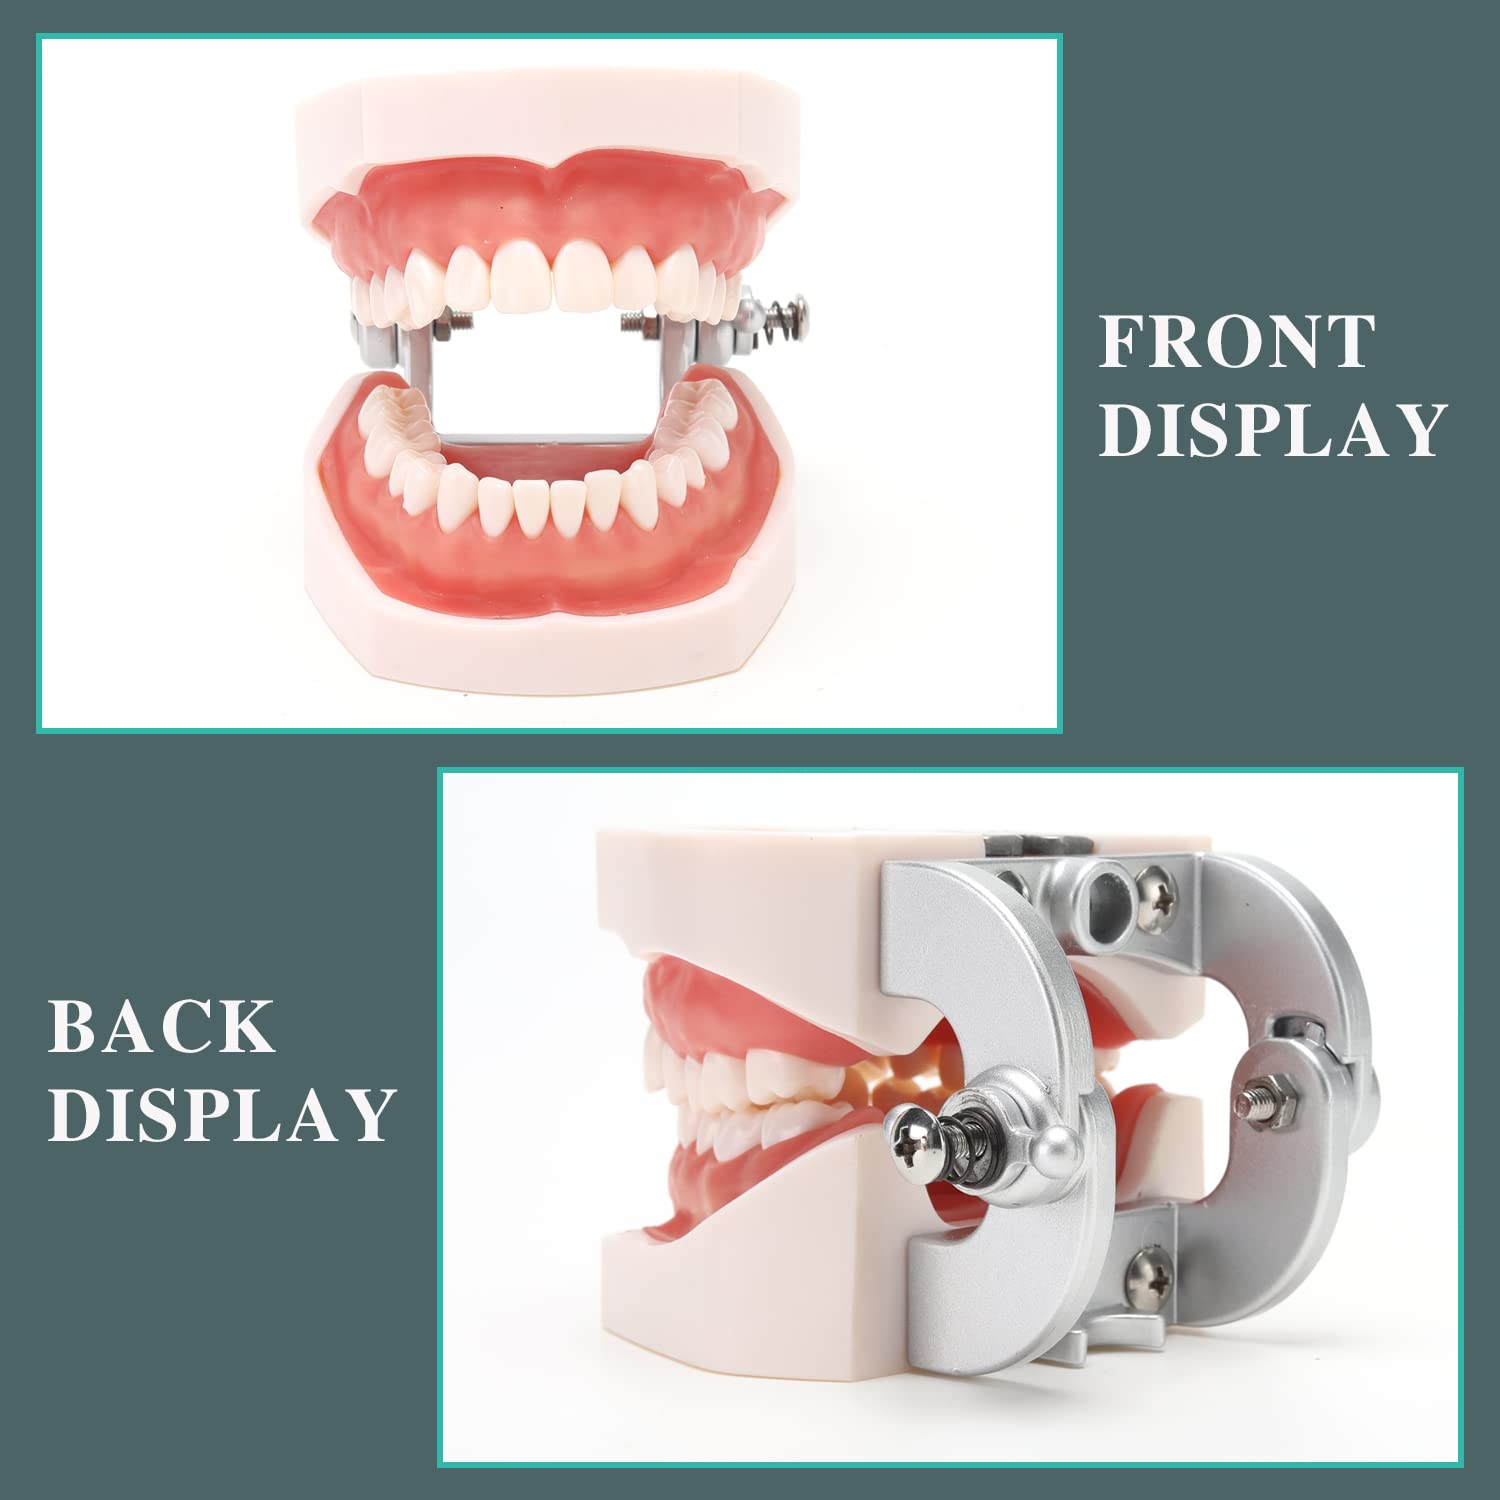 RONTEN Dental Teeth Model Adult Anatomical Teeth Model with 28 Teeth Detachable Teeth Display